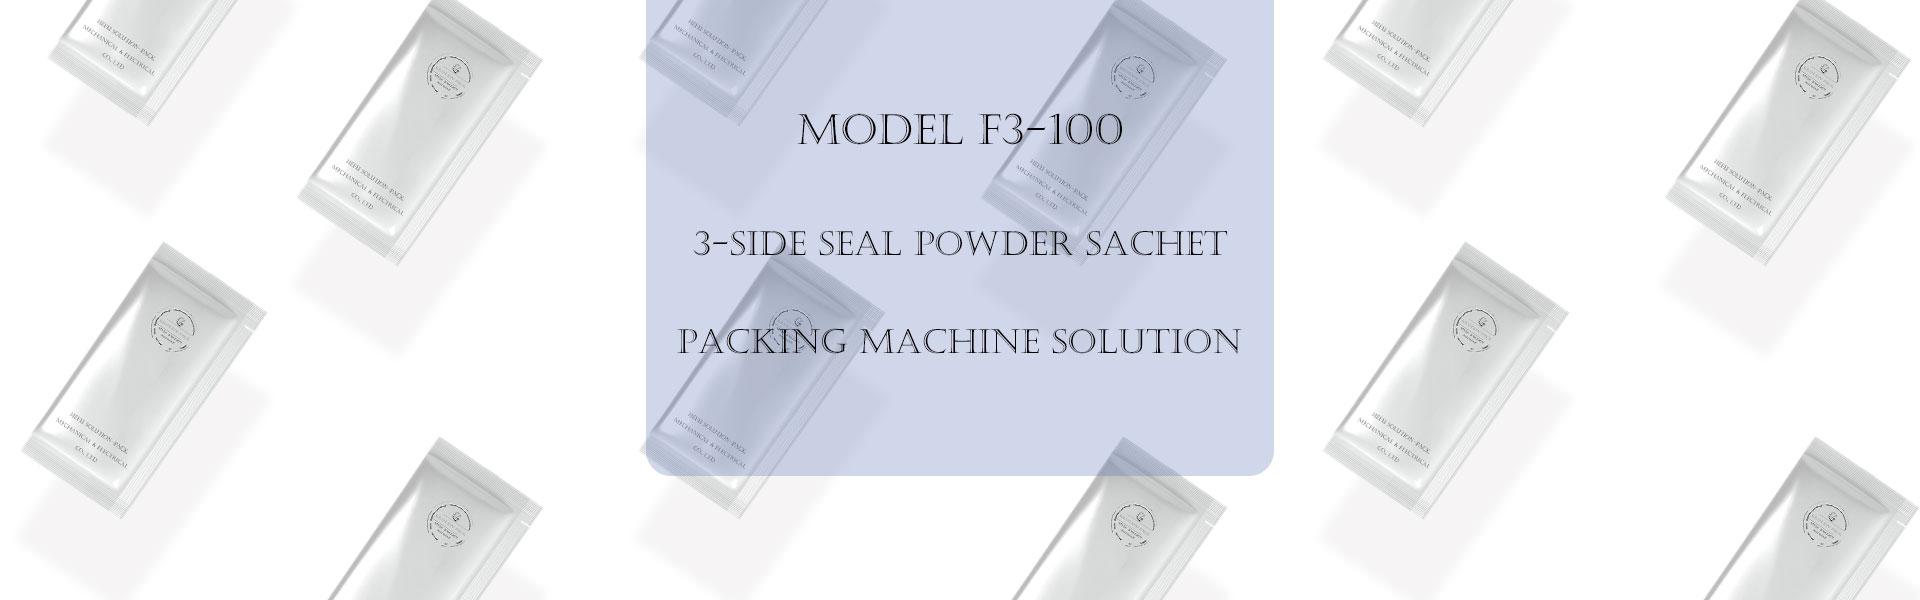 Solution-Pack | 3-Side Seal Powder Sachet Packing Machine | Powder Stick Sachet | Powder Sachet Packing Machine | Sachet Packing Machine